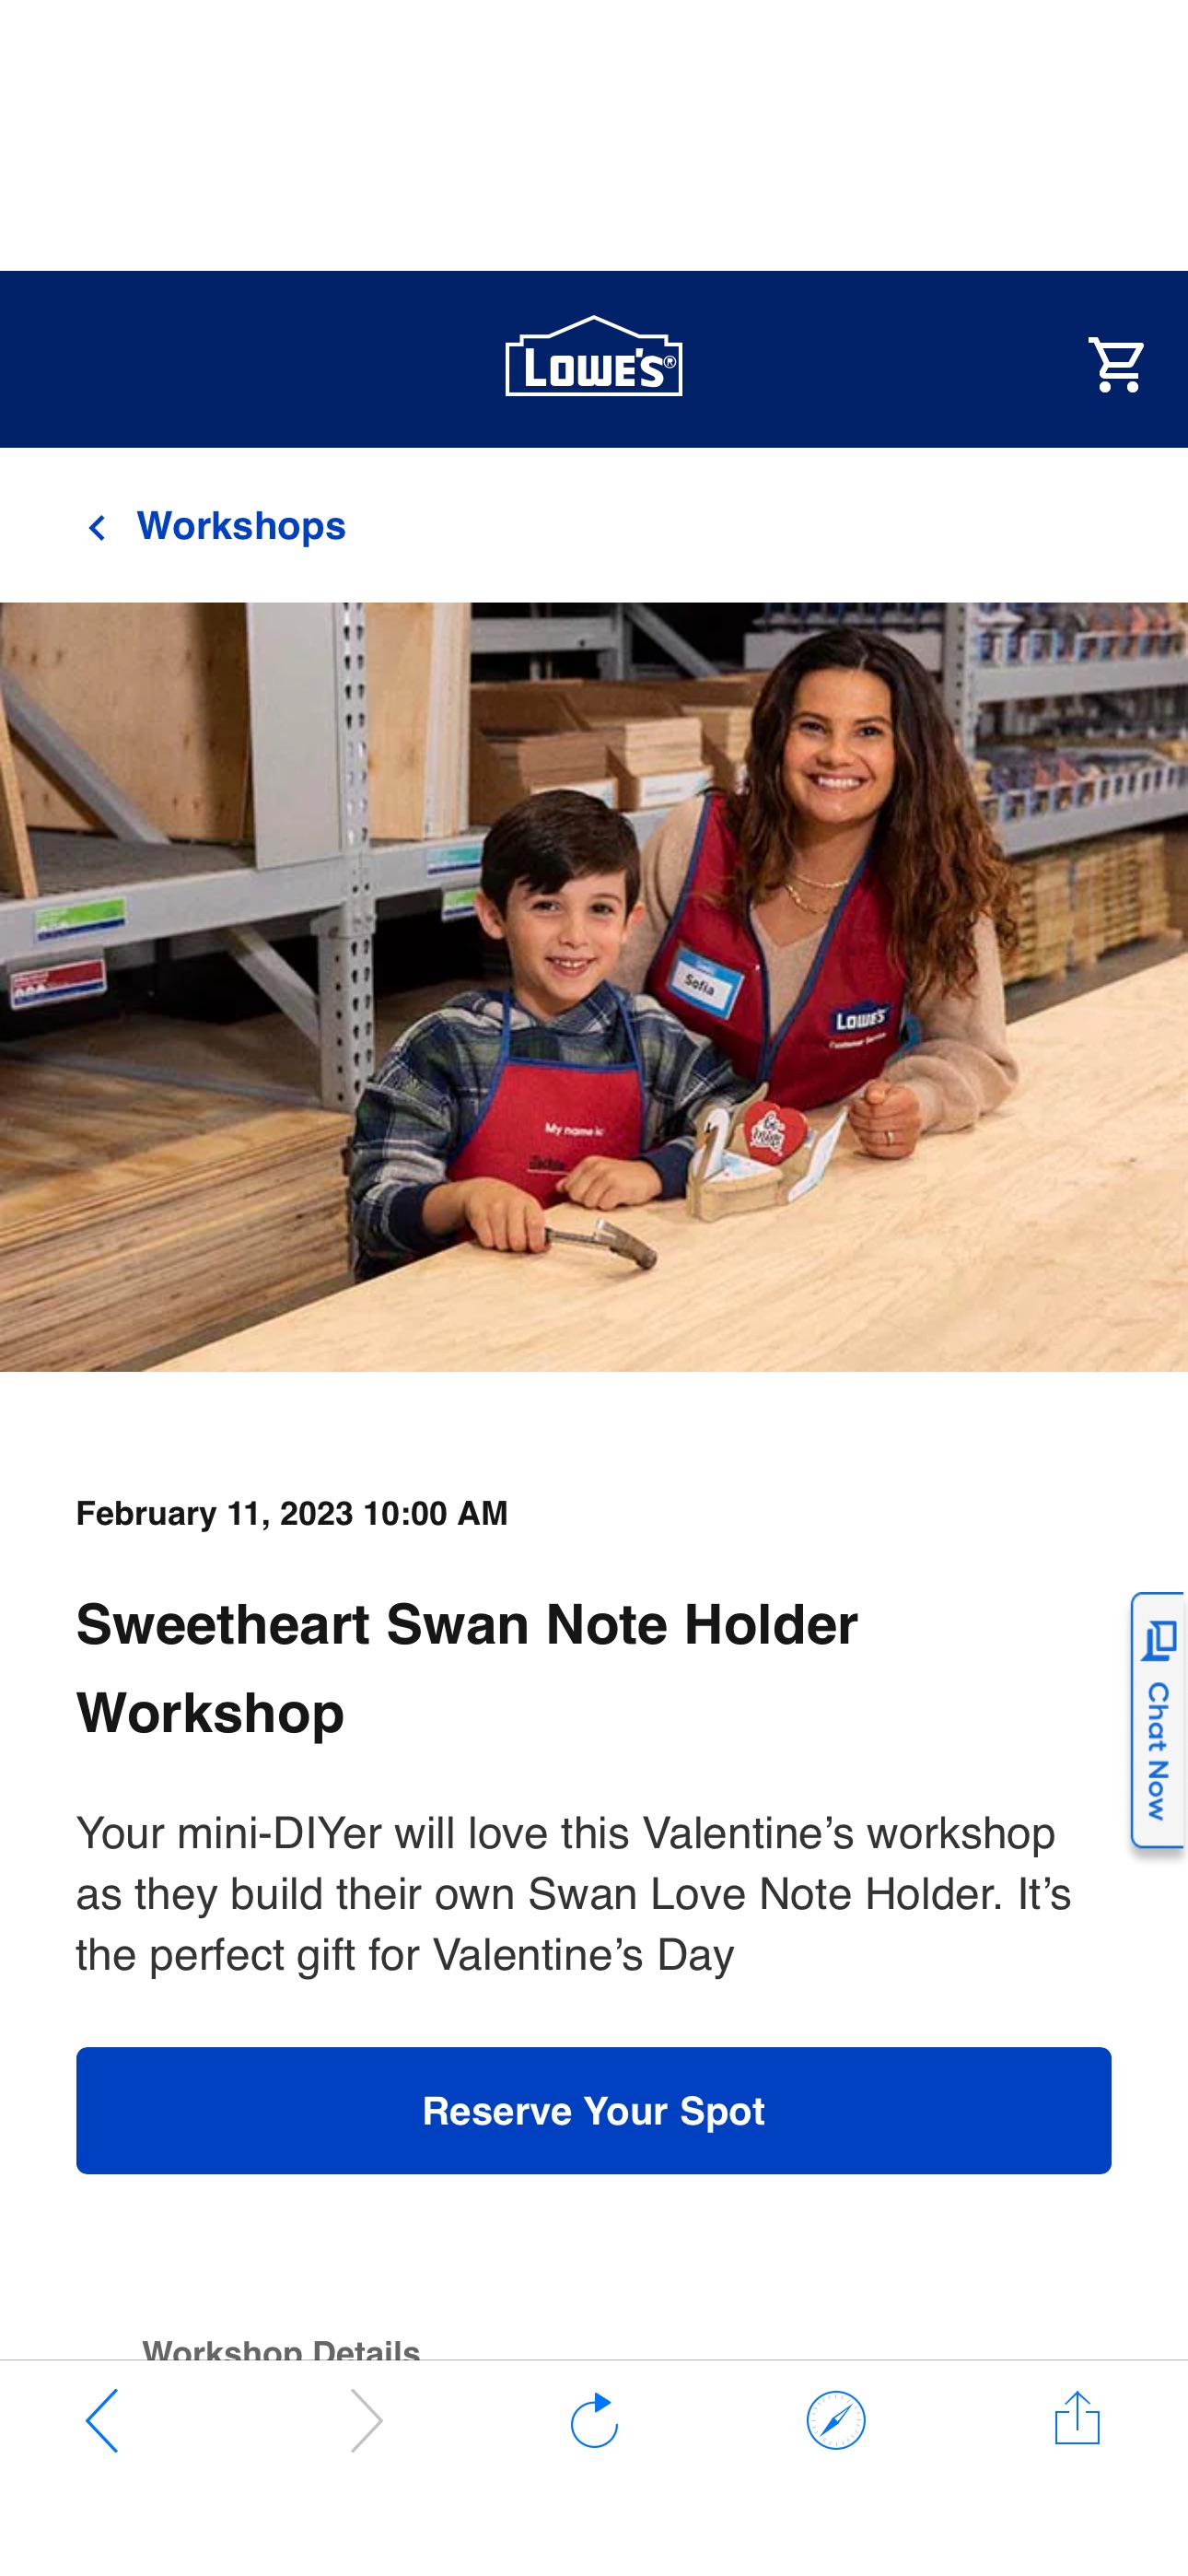 Sweetheart Swan Note Holder Workshop
二月份lowe’s 手工活动注册